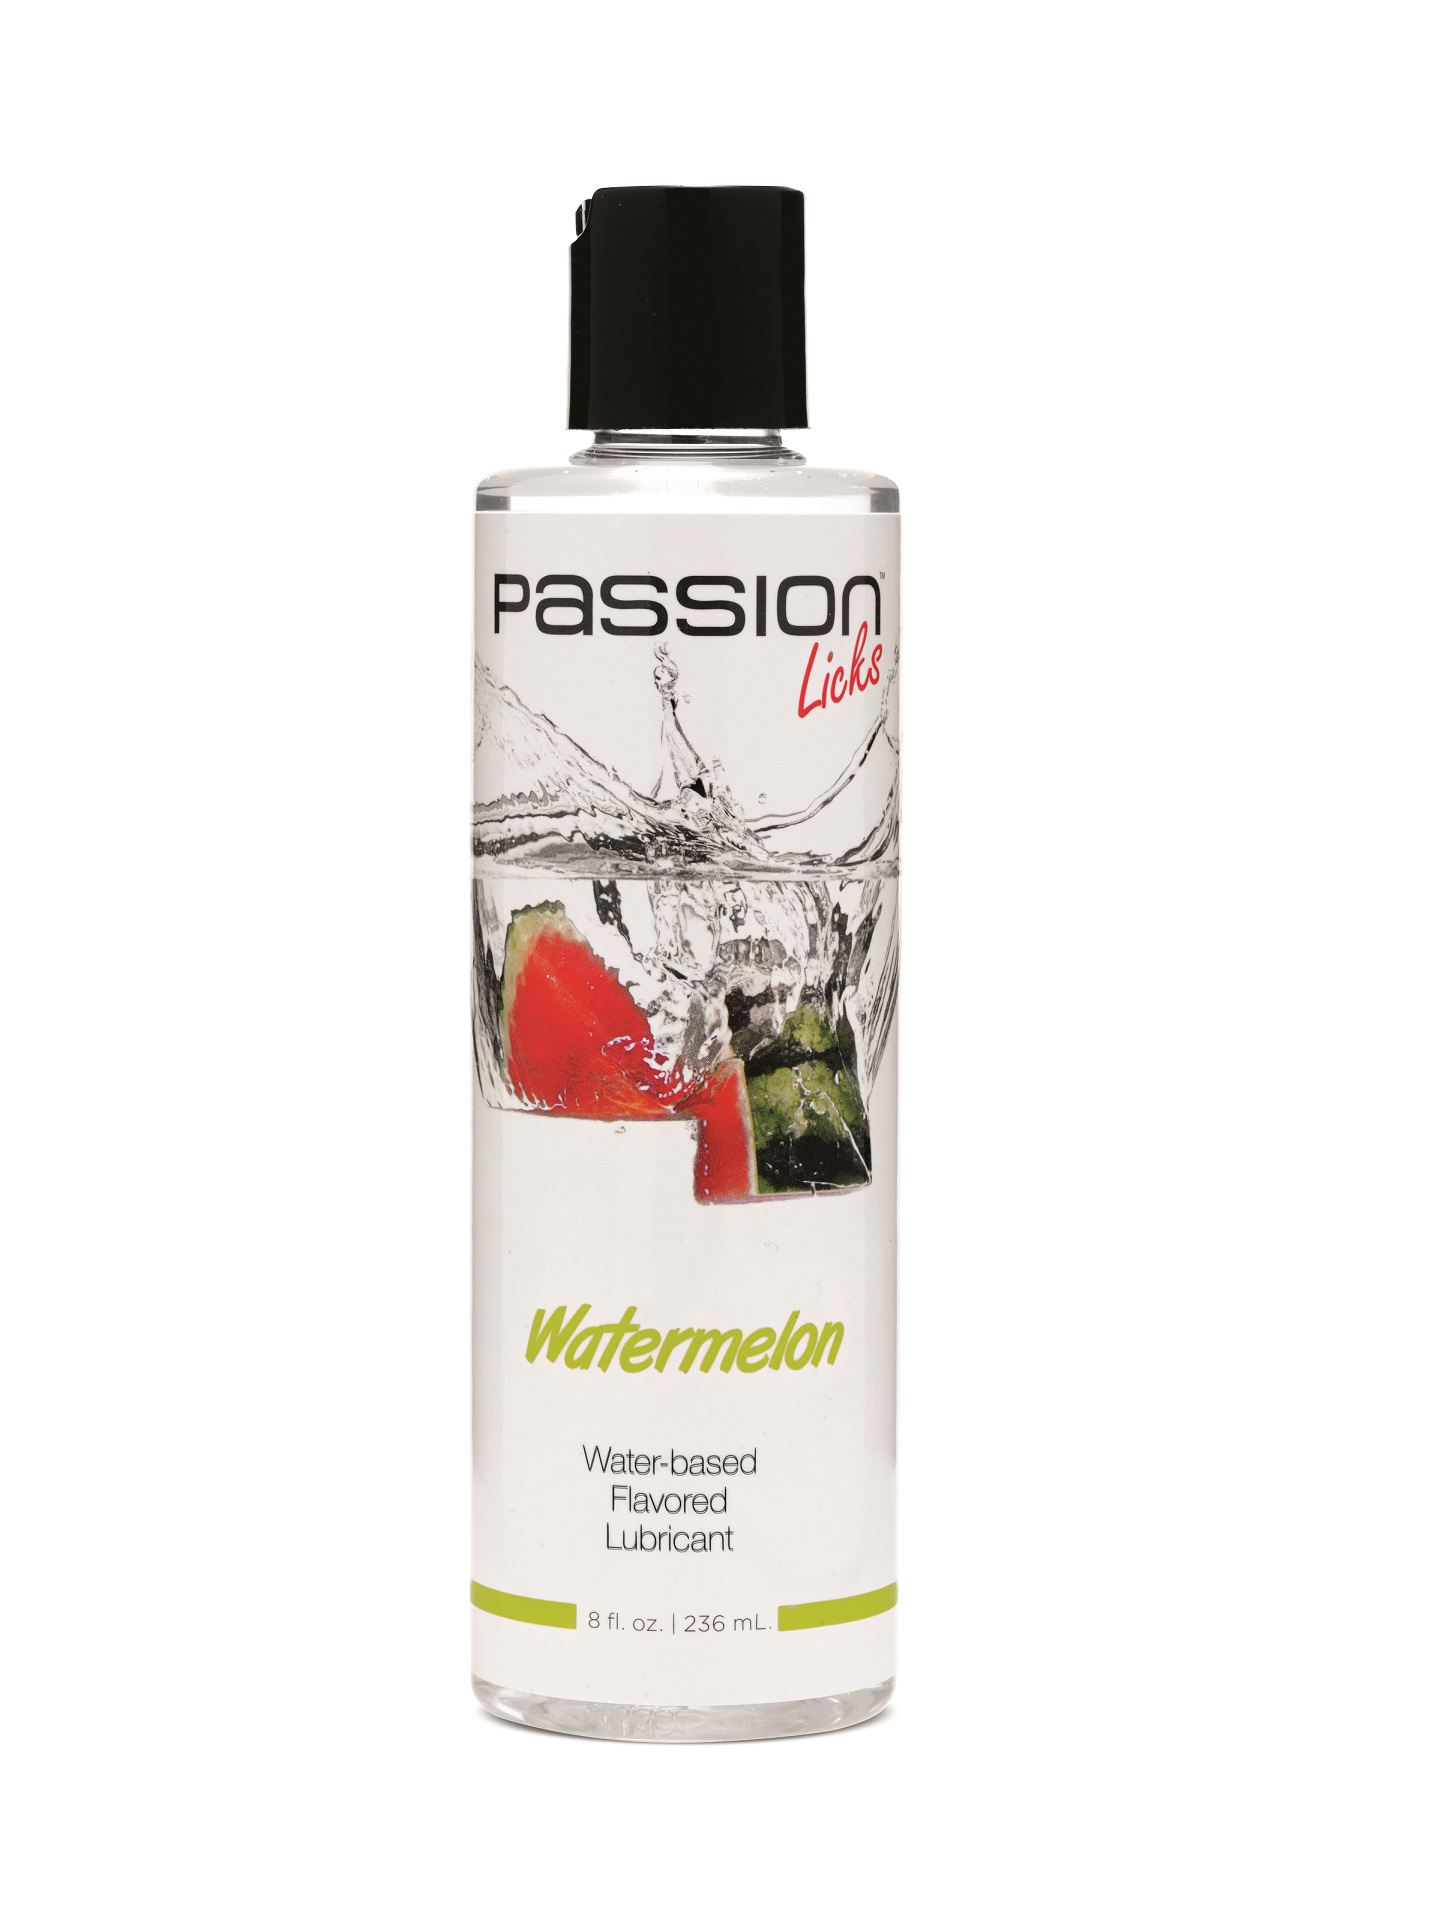 Passsion Licks Watermelon Water Based Flavored Lubricant 8 Fl Oz / 236 ml